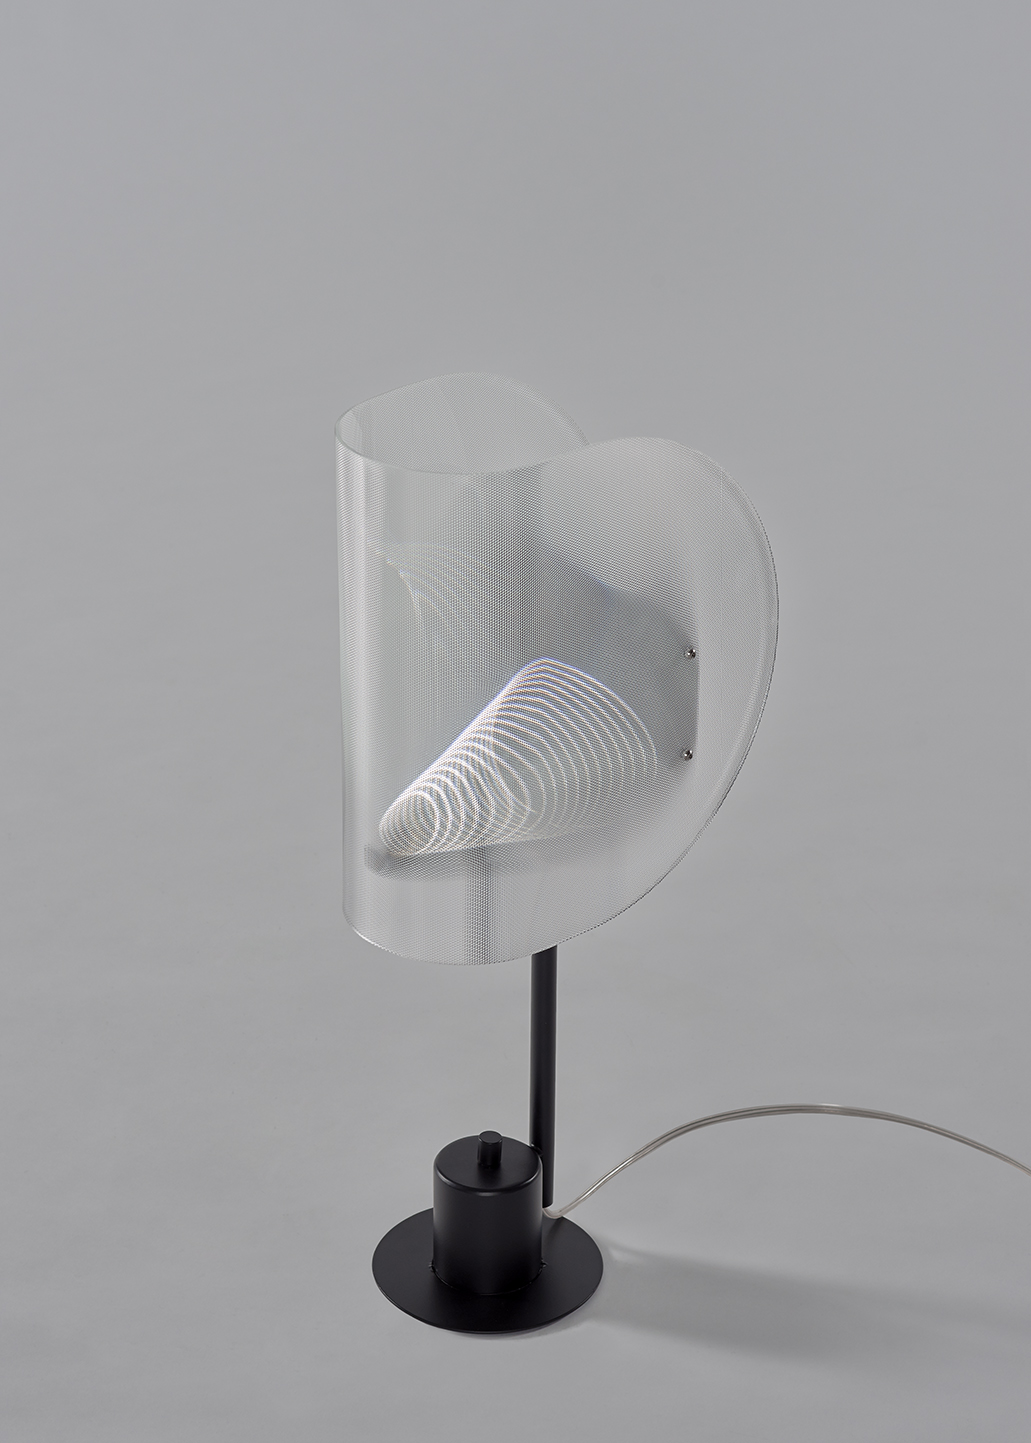 Every Cone Light 2 - Arnout Meijer Studio